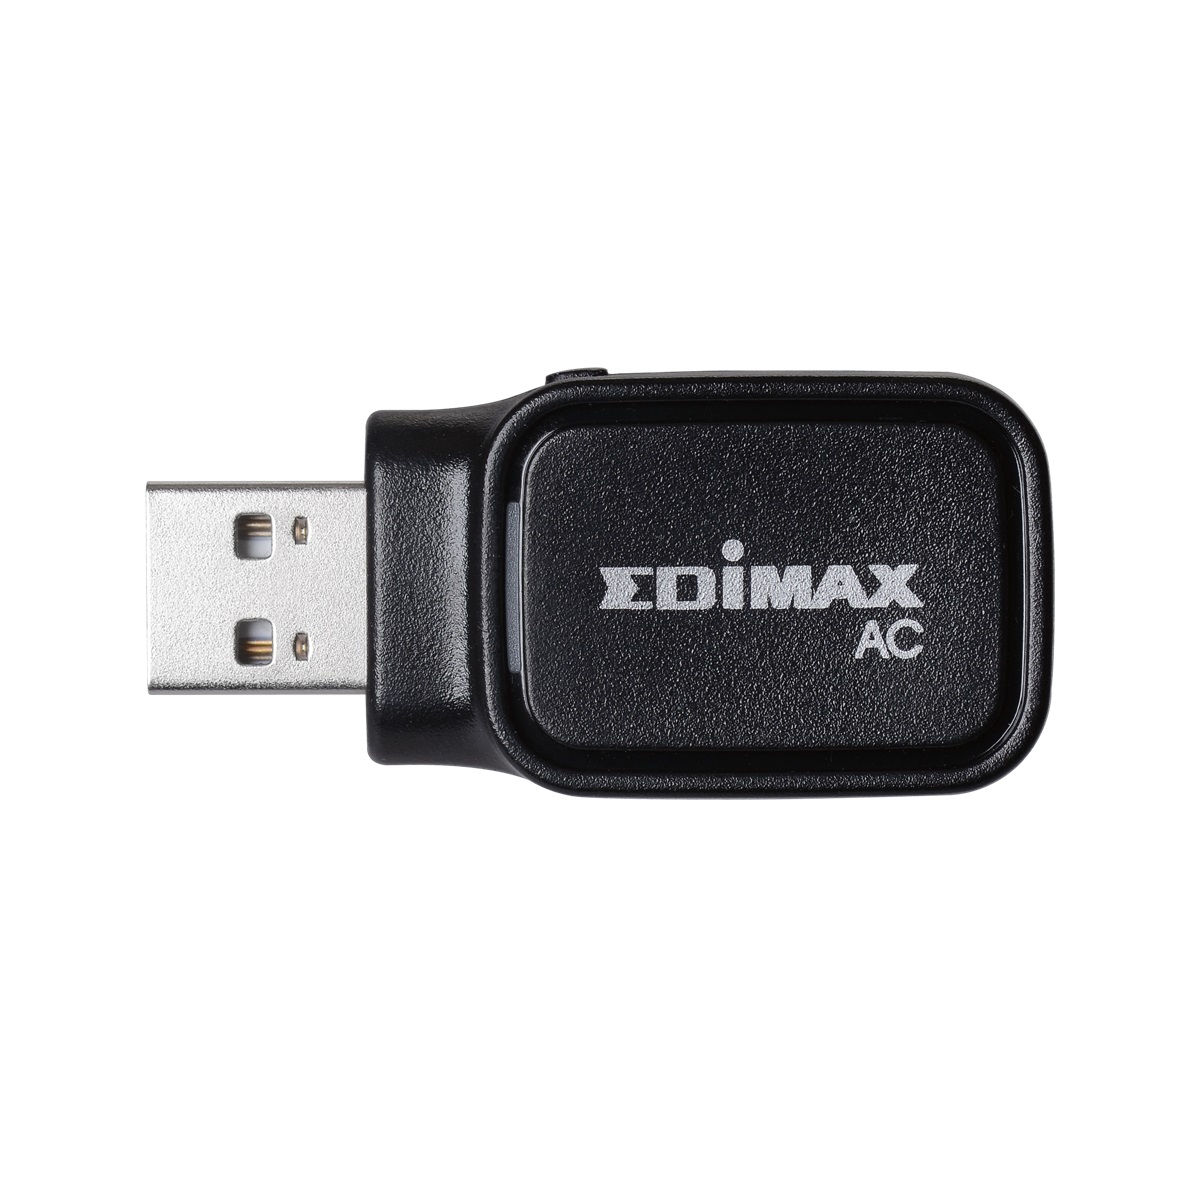 Edimax Mobile Phones & Portable Devices Driver